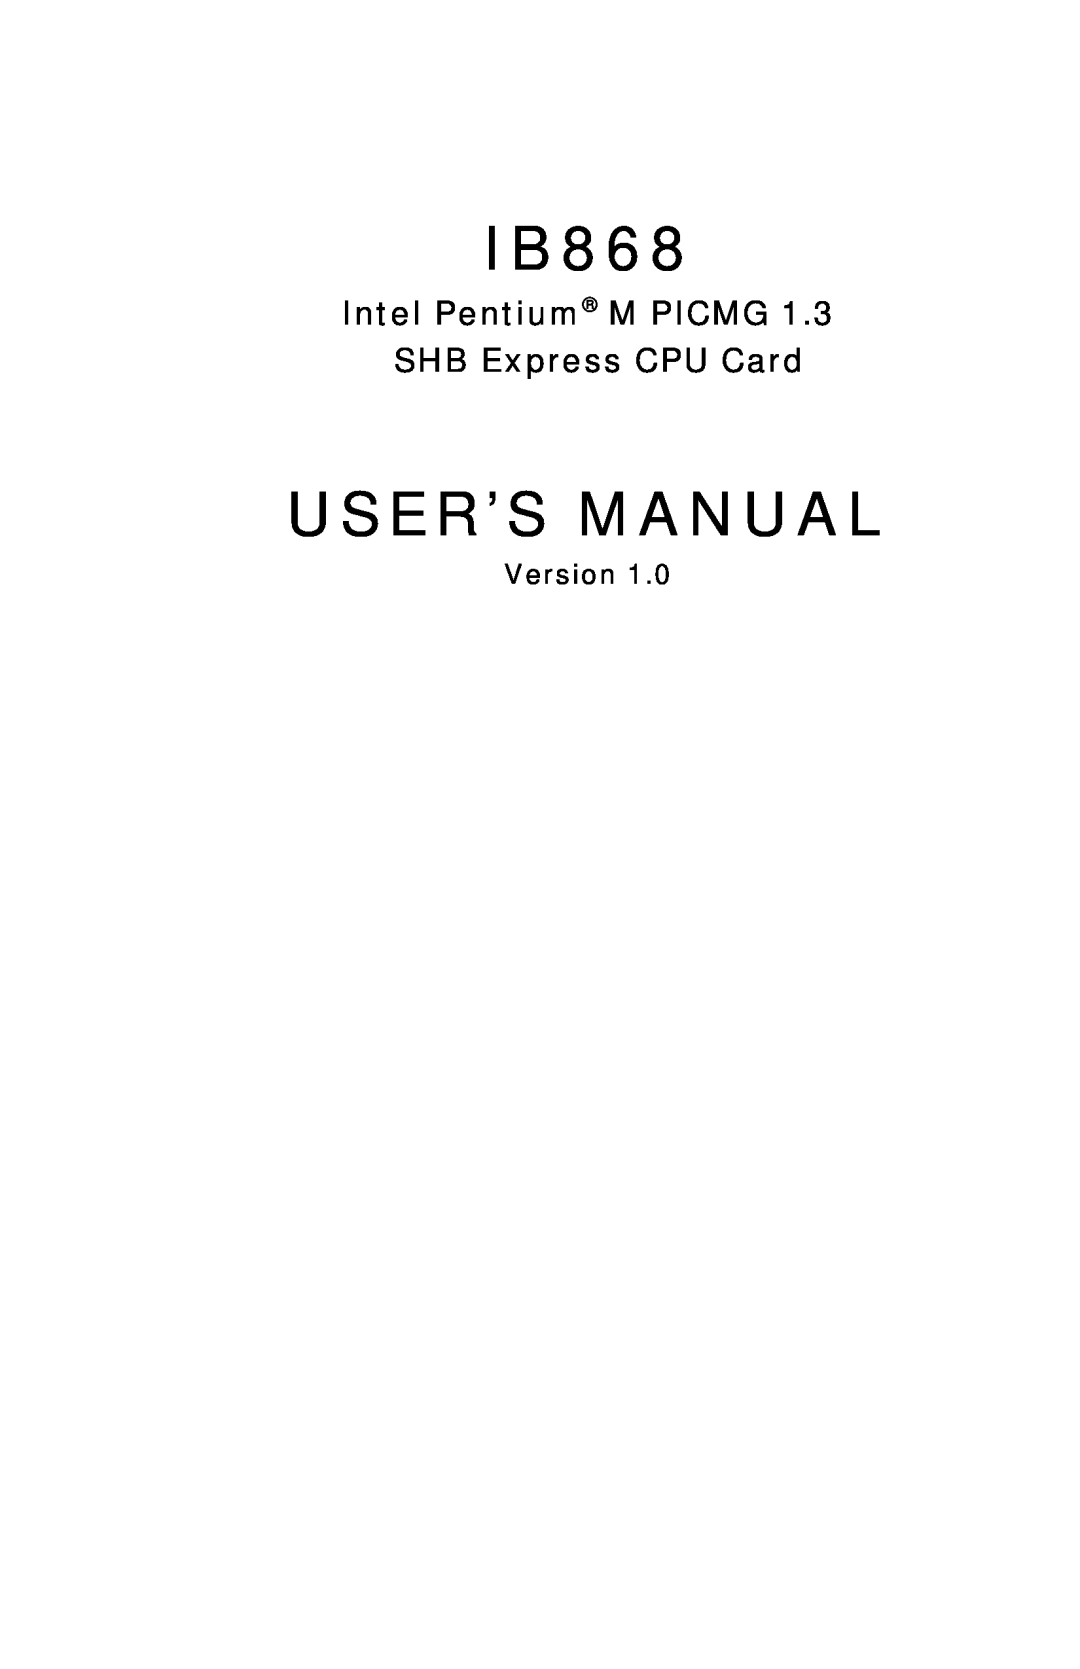 Intel IB868 user manual Intel Pentium M PICMG SHB Express CPU Card, Version, User’S Manual 